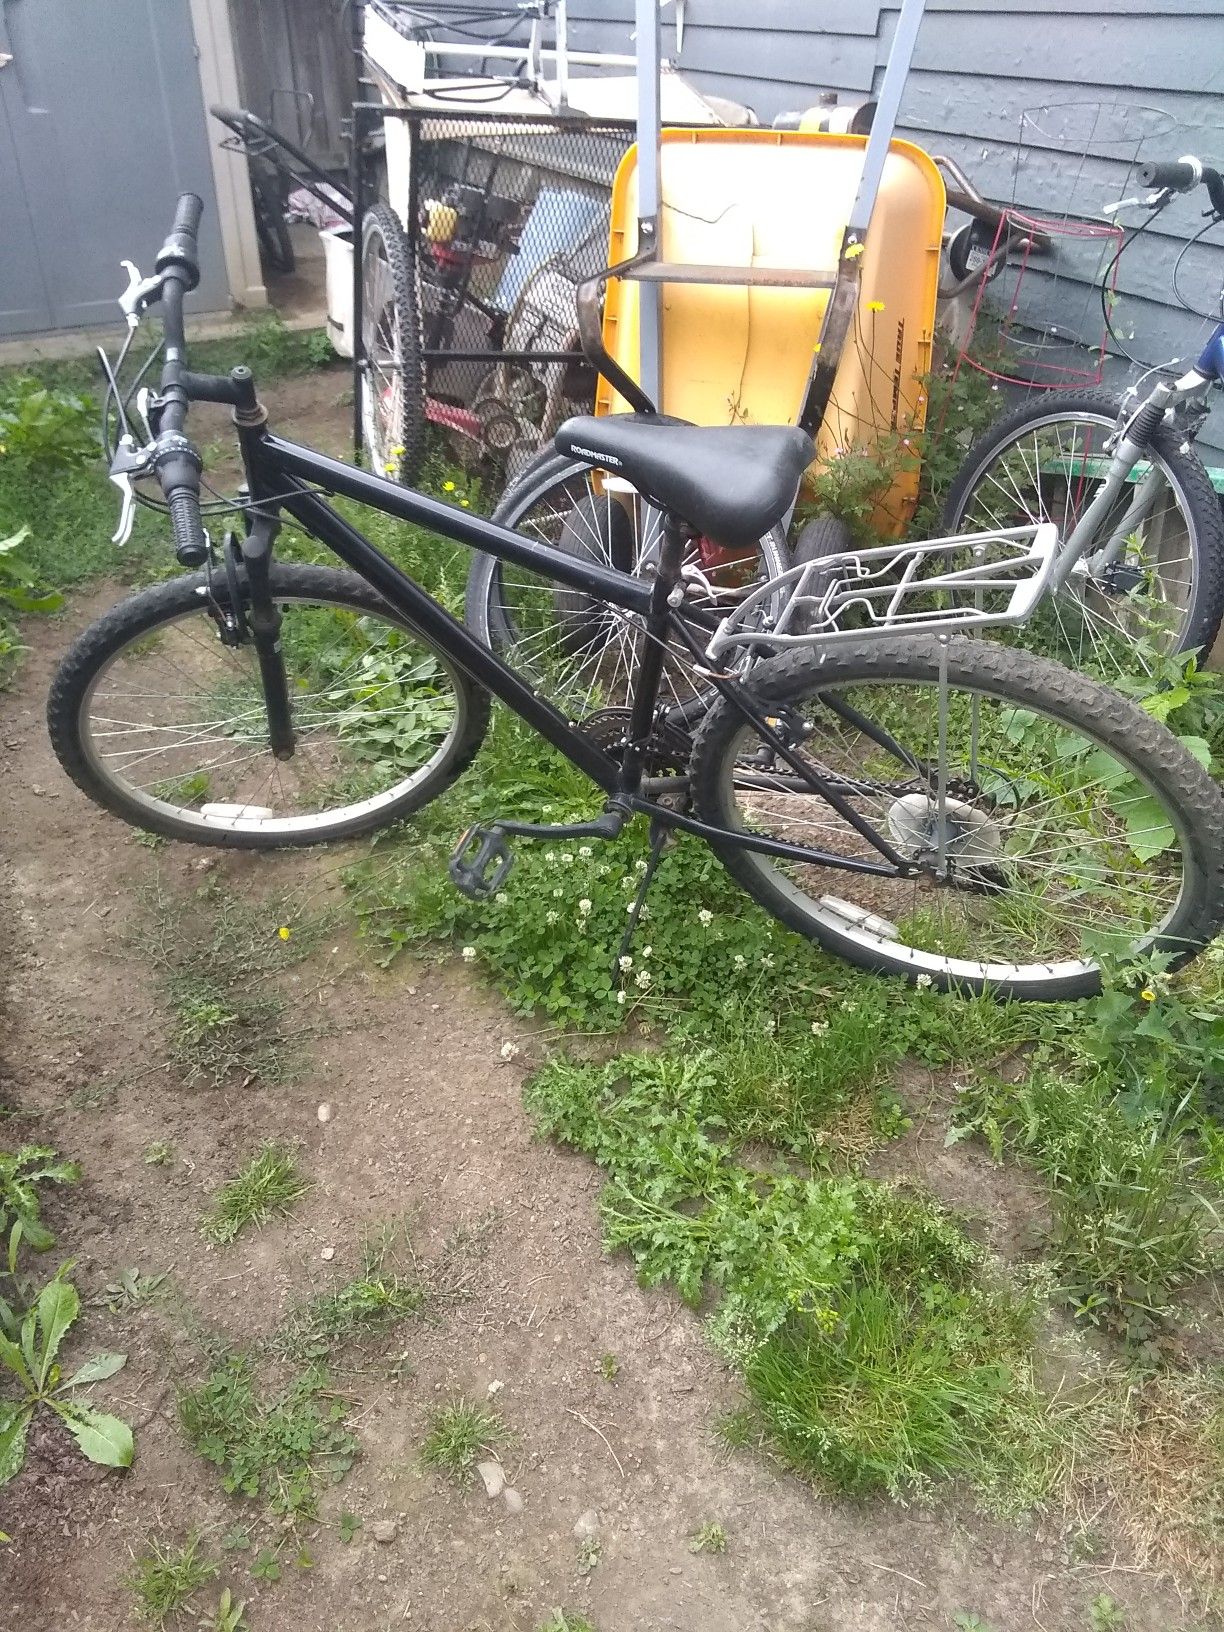 Trek mt bike for sale!